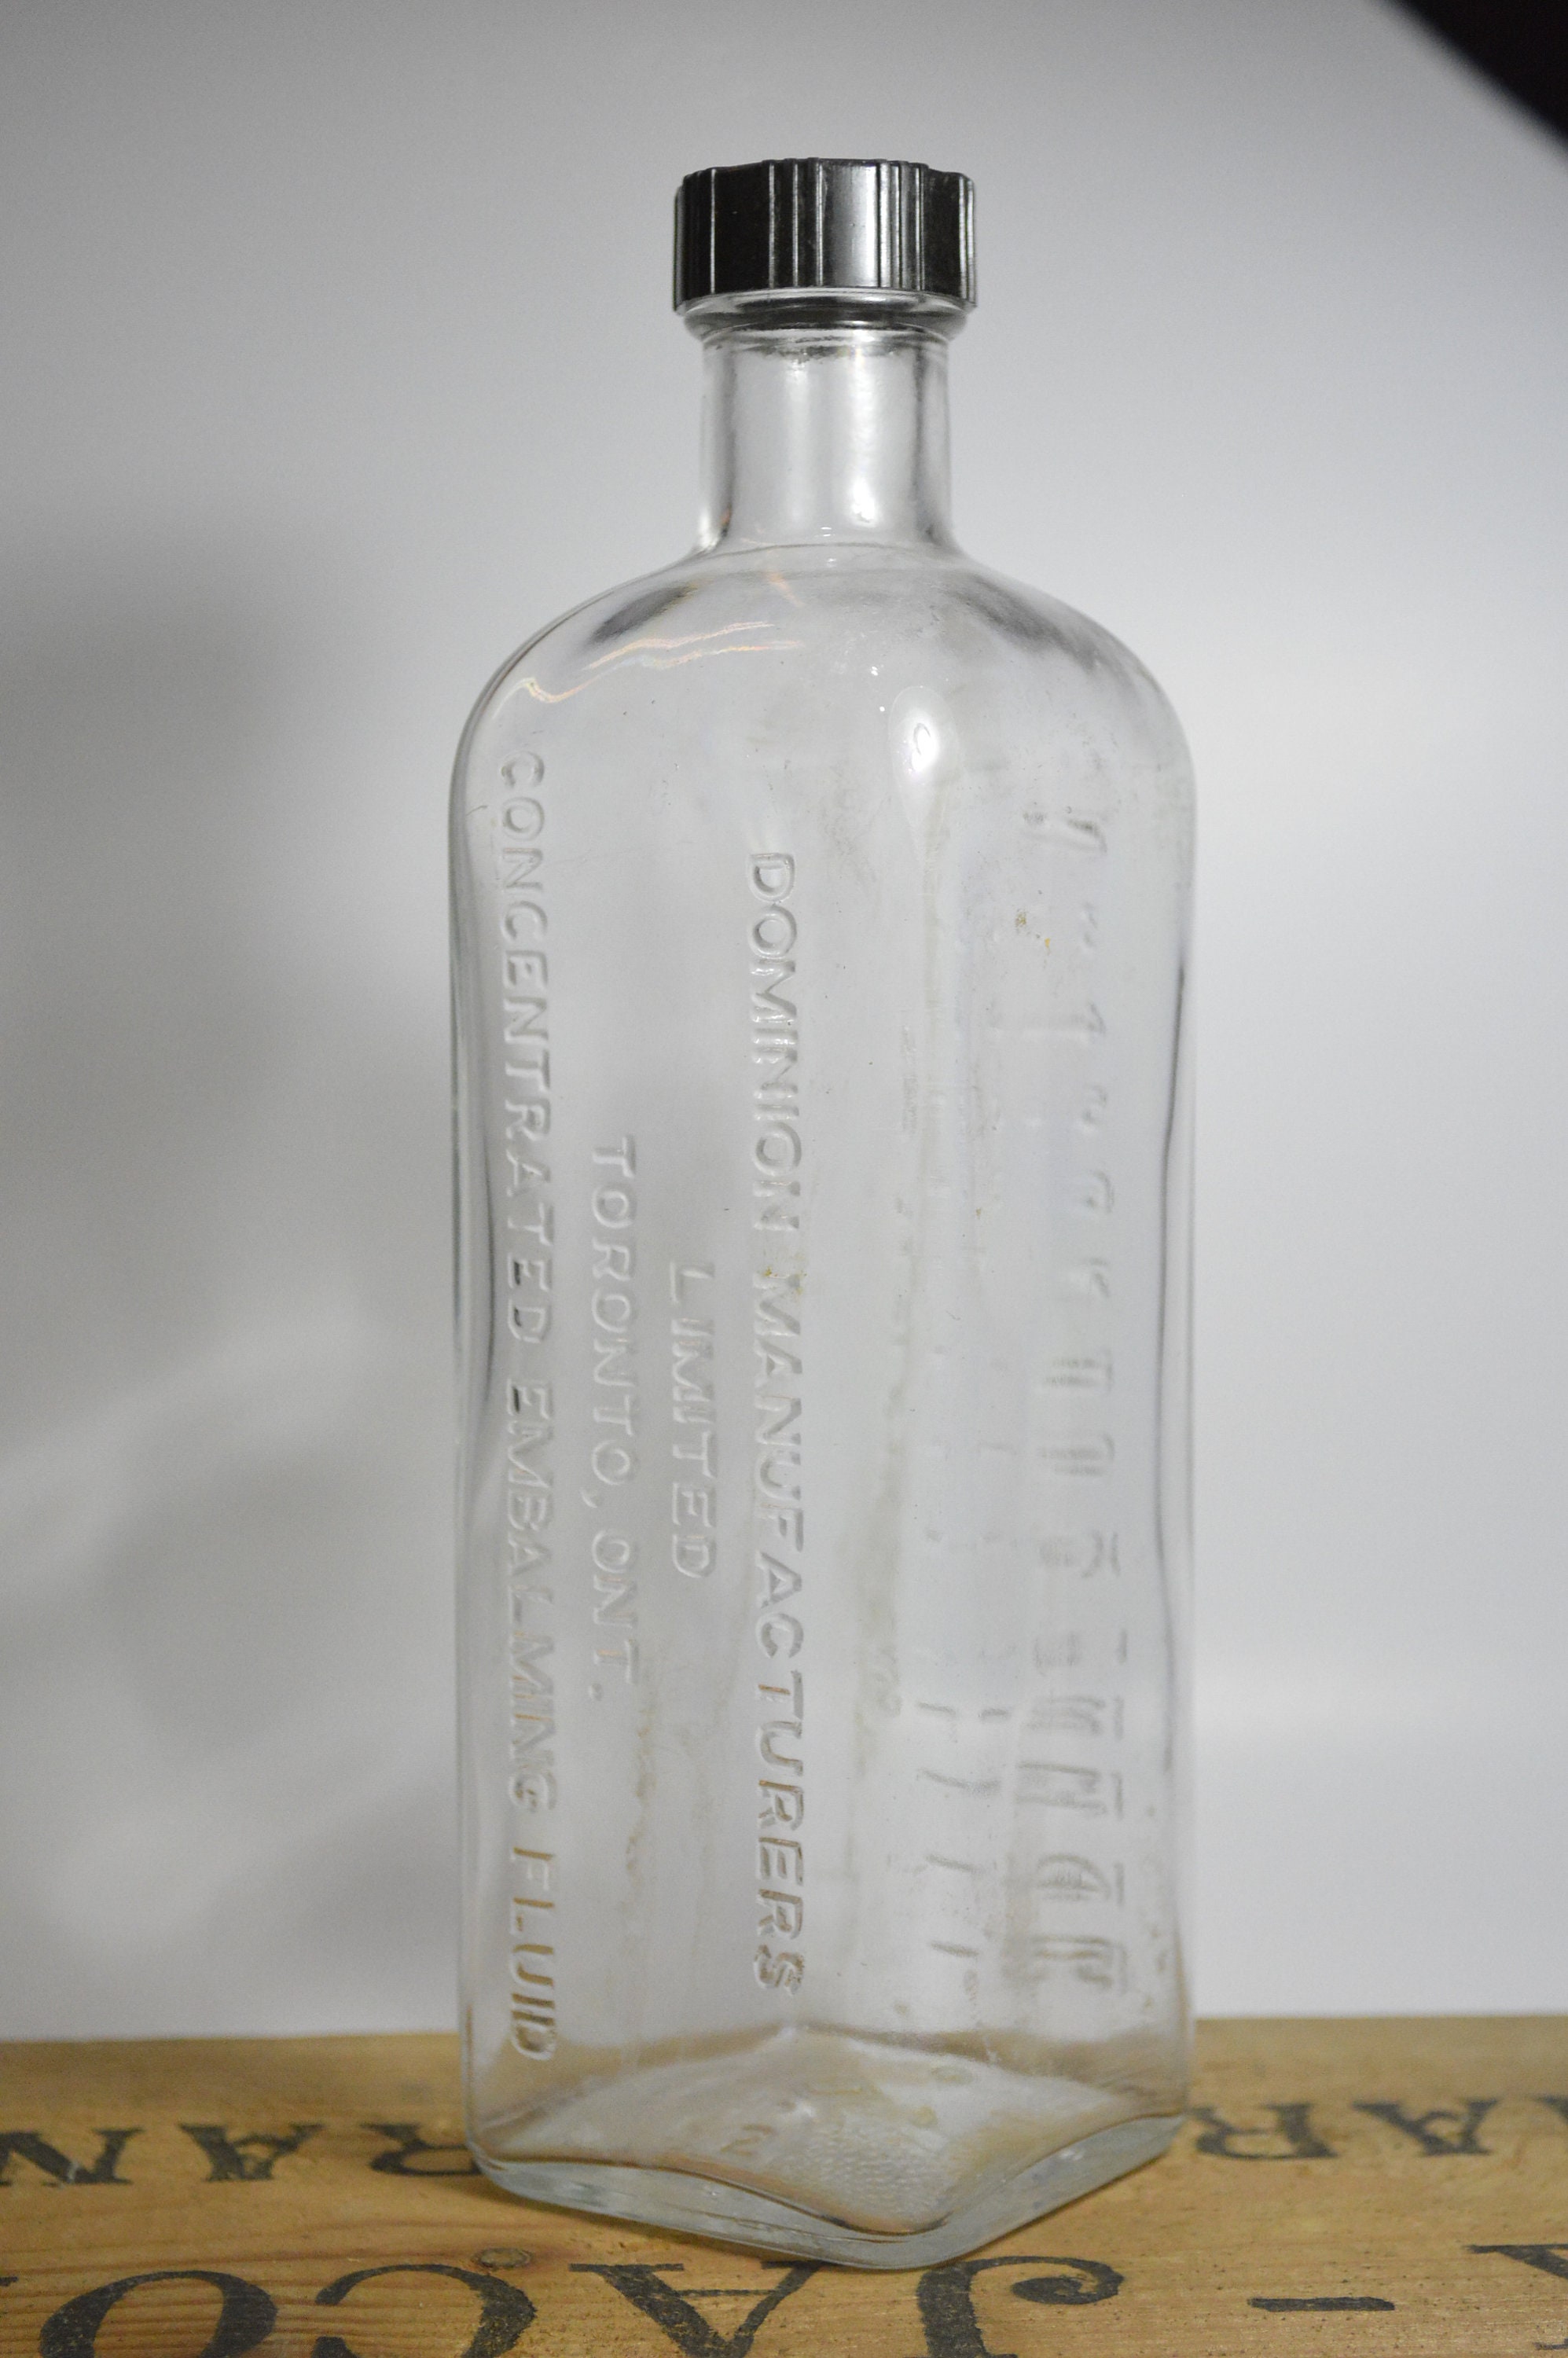 Lait De Magnesie Dr Charles Milk of Magnesia Quebec Antique Medicine Bottle  